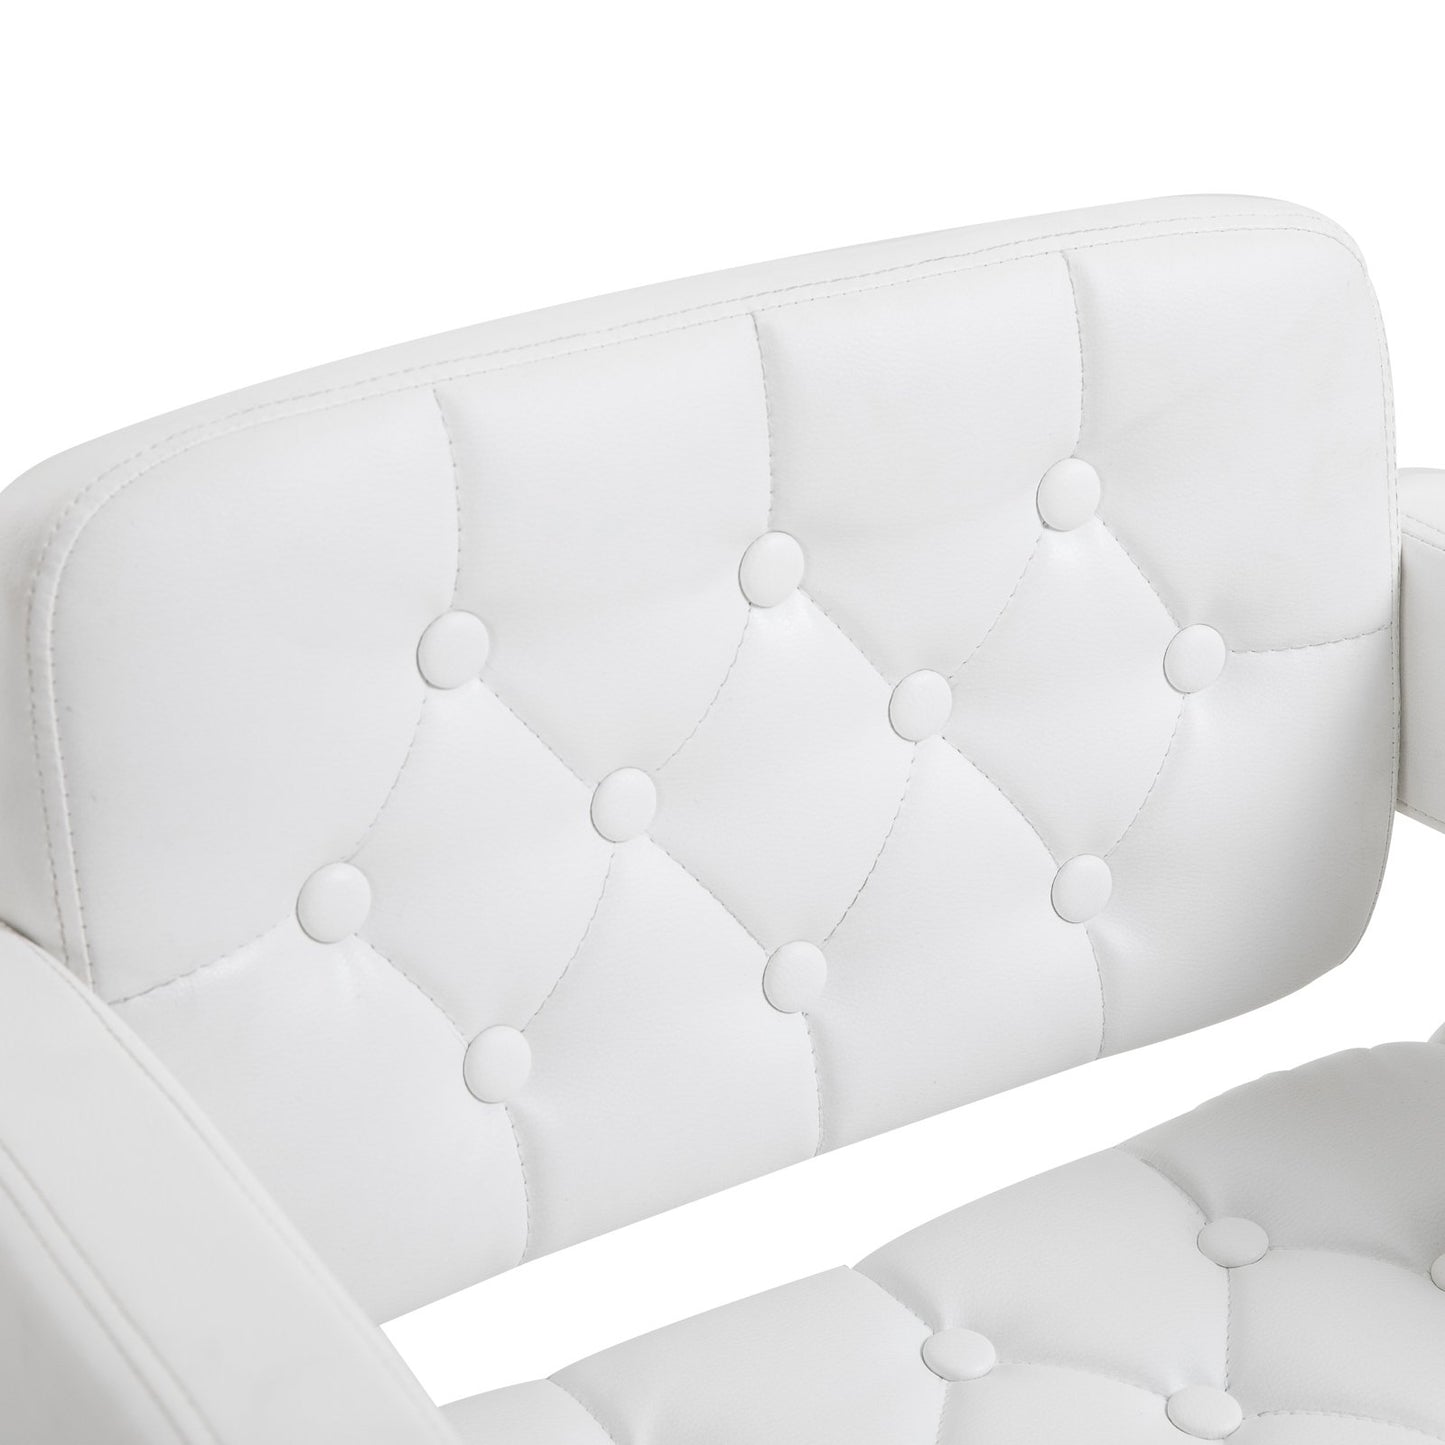 HOMCOM PU Leather Kitchen Bar Stools Swivel Bar Chairs W/Chrome Metal Base - White